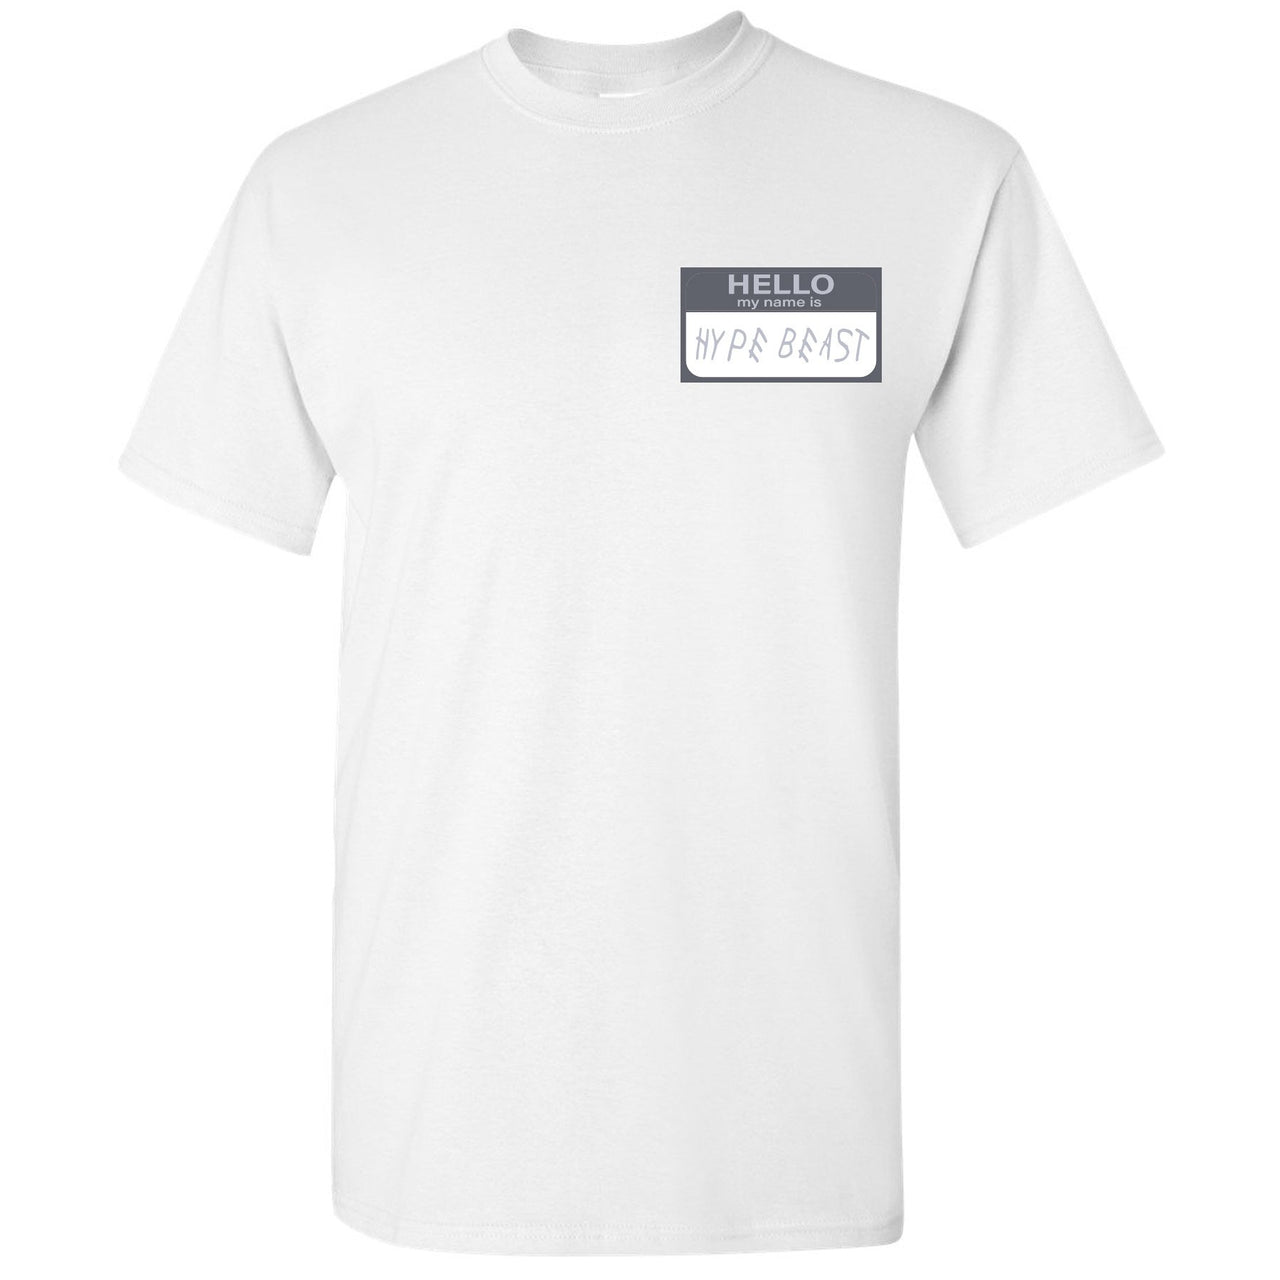 Analog 700s T Shirt | Hello My Name Is Hype Beast Woe, White